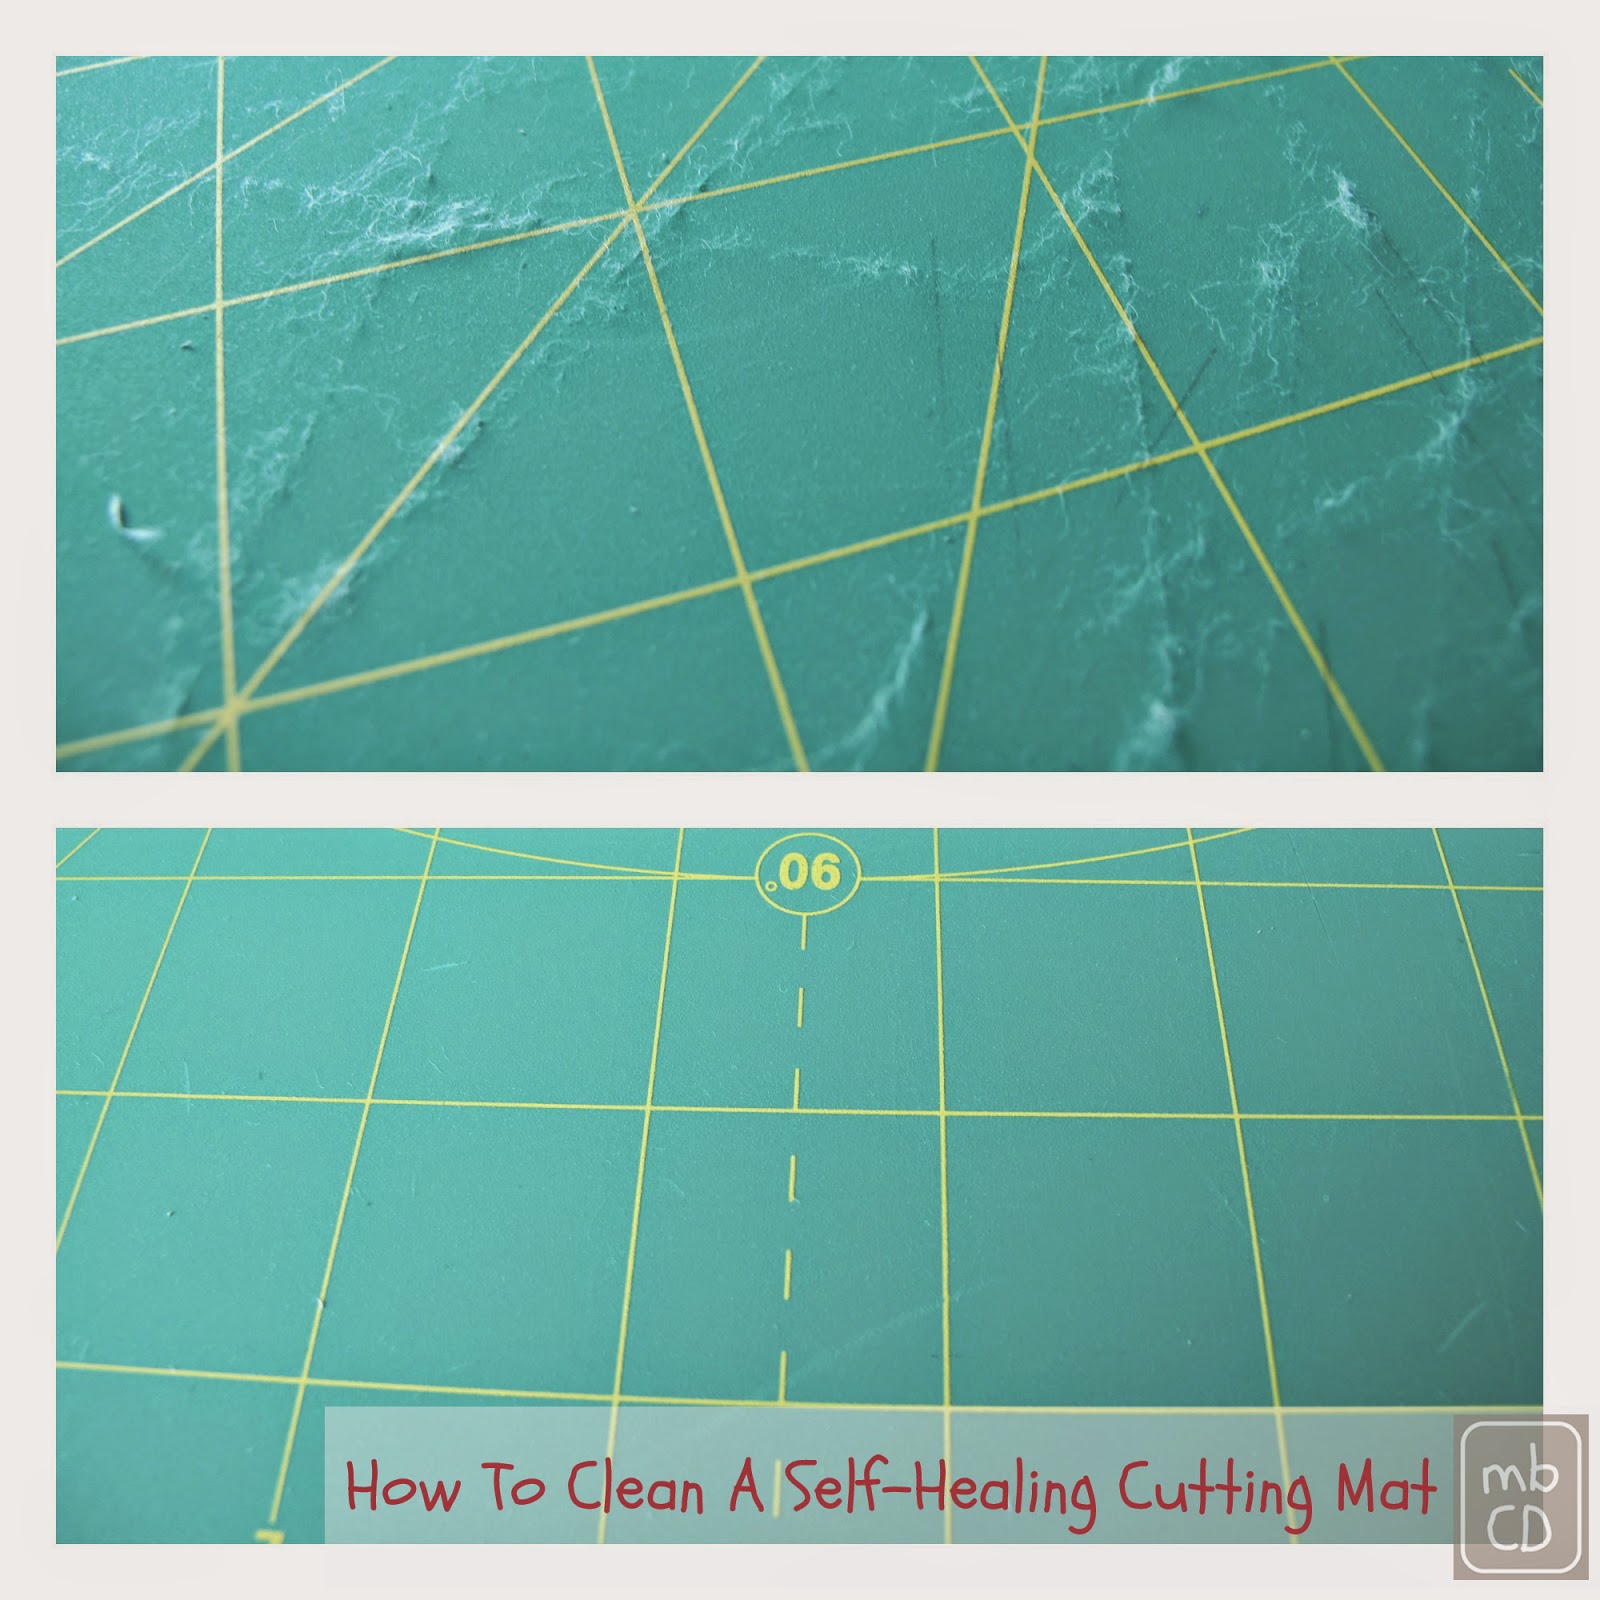 How to Clean a Self Healing Cutting Mat?